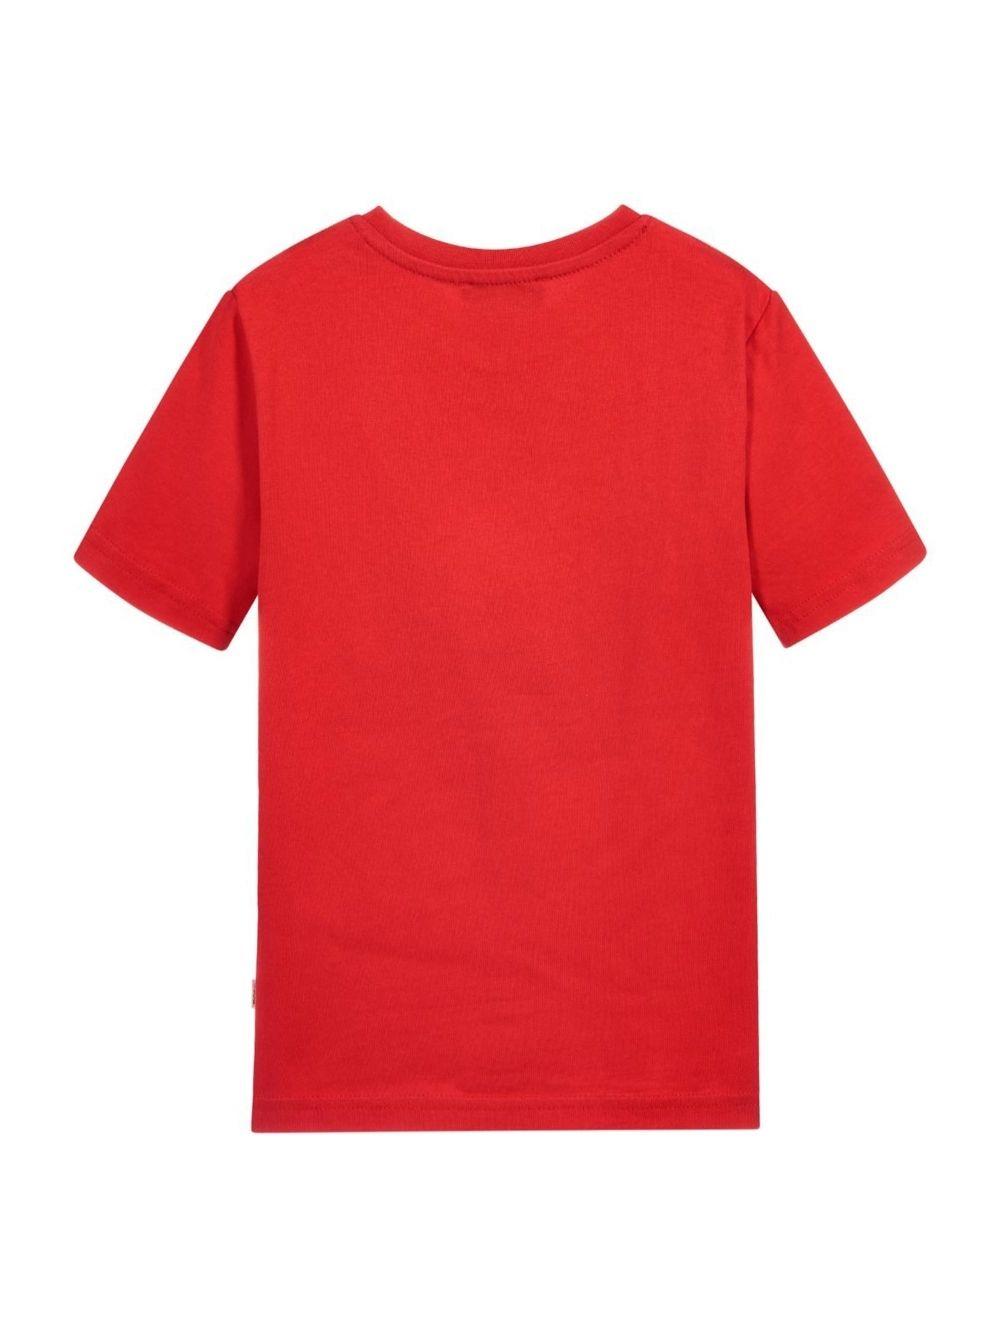 Grey and Red Logo - Hugo Boss Boys Red T-Shirt | Children's Wear at Designerwear